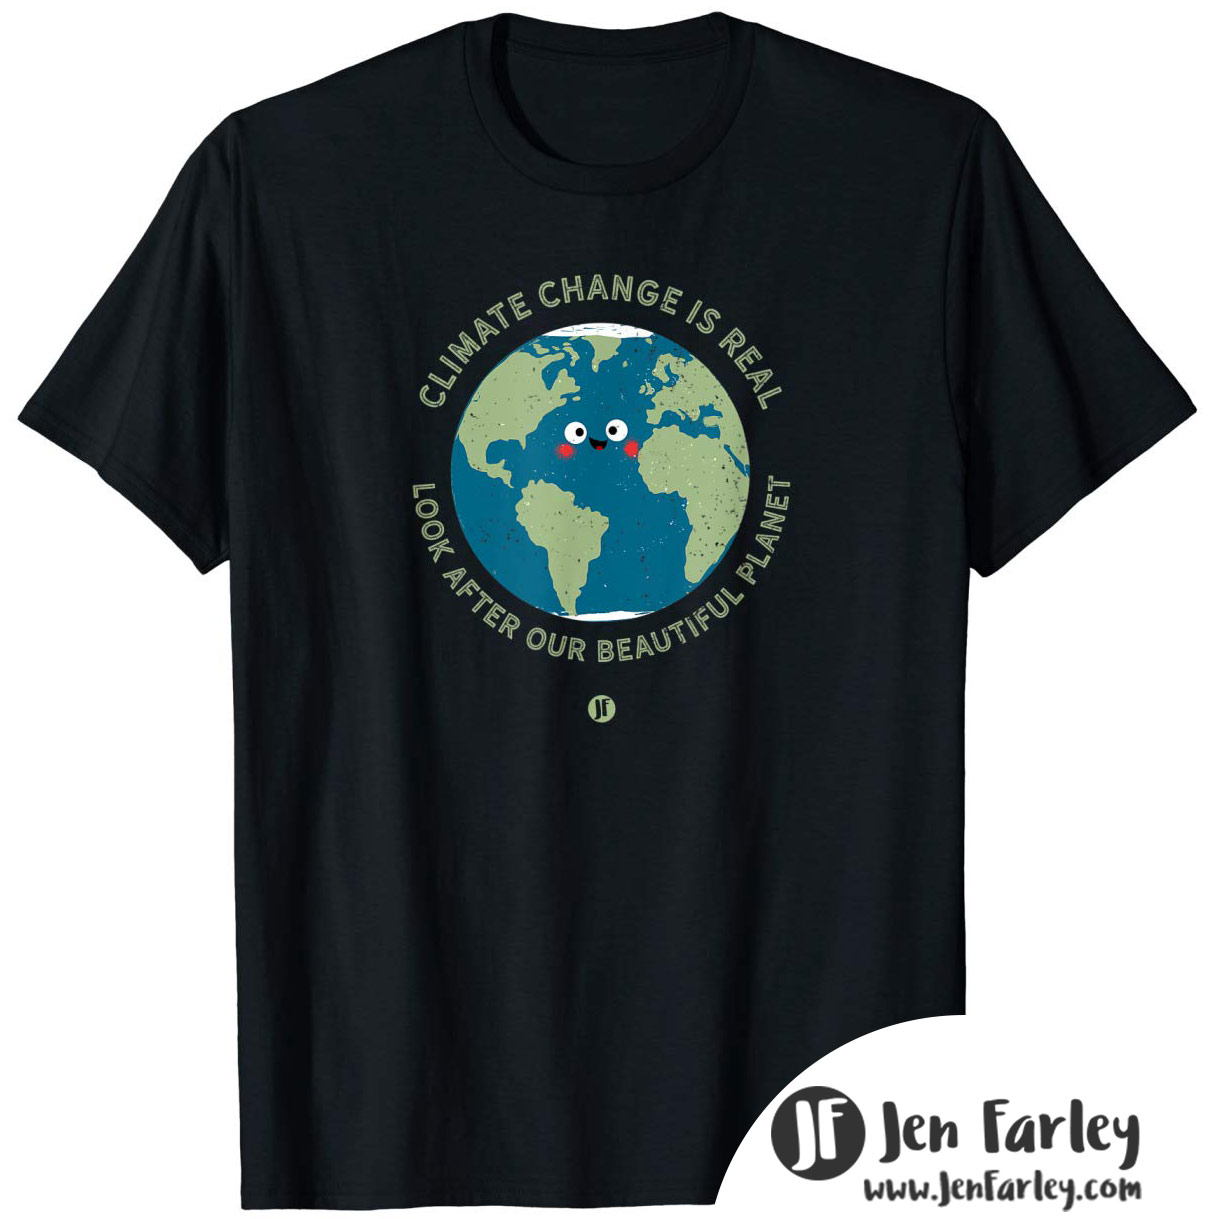 Climate Change Tshirt Black Jennifer Farley